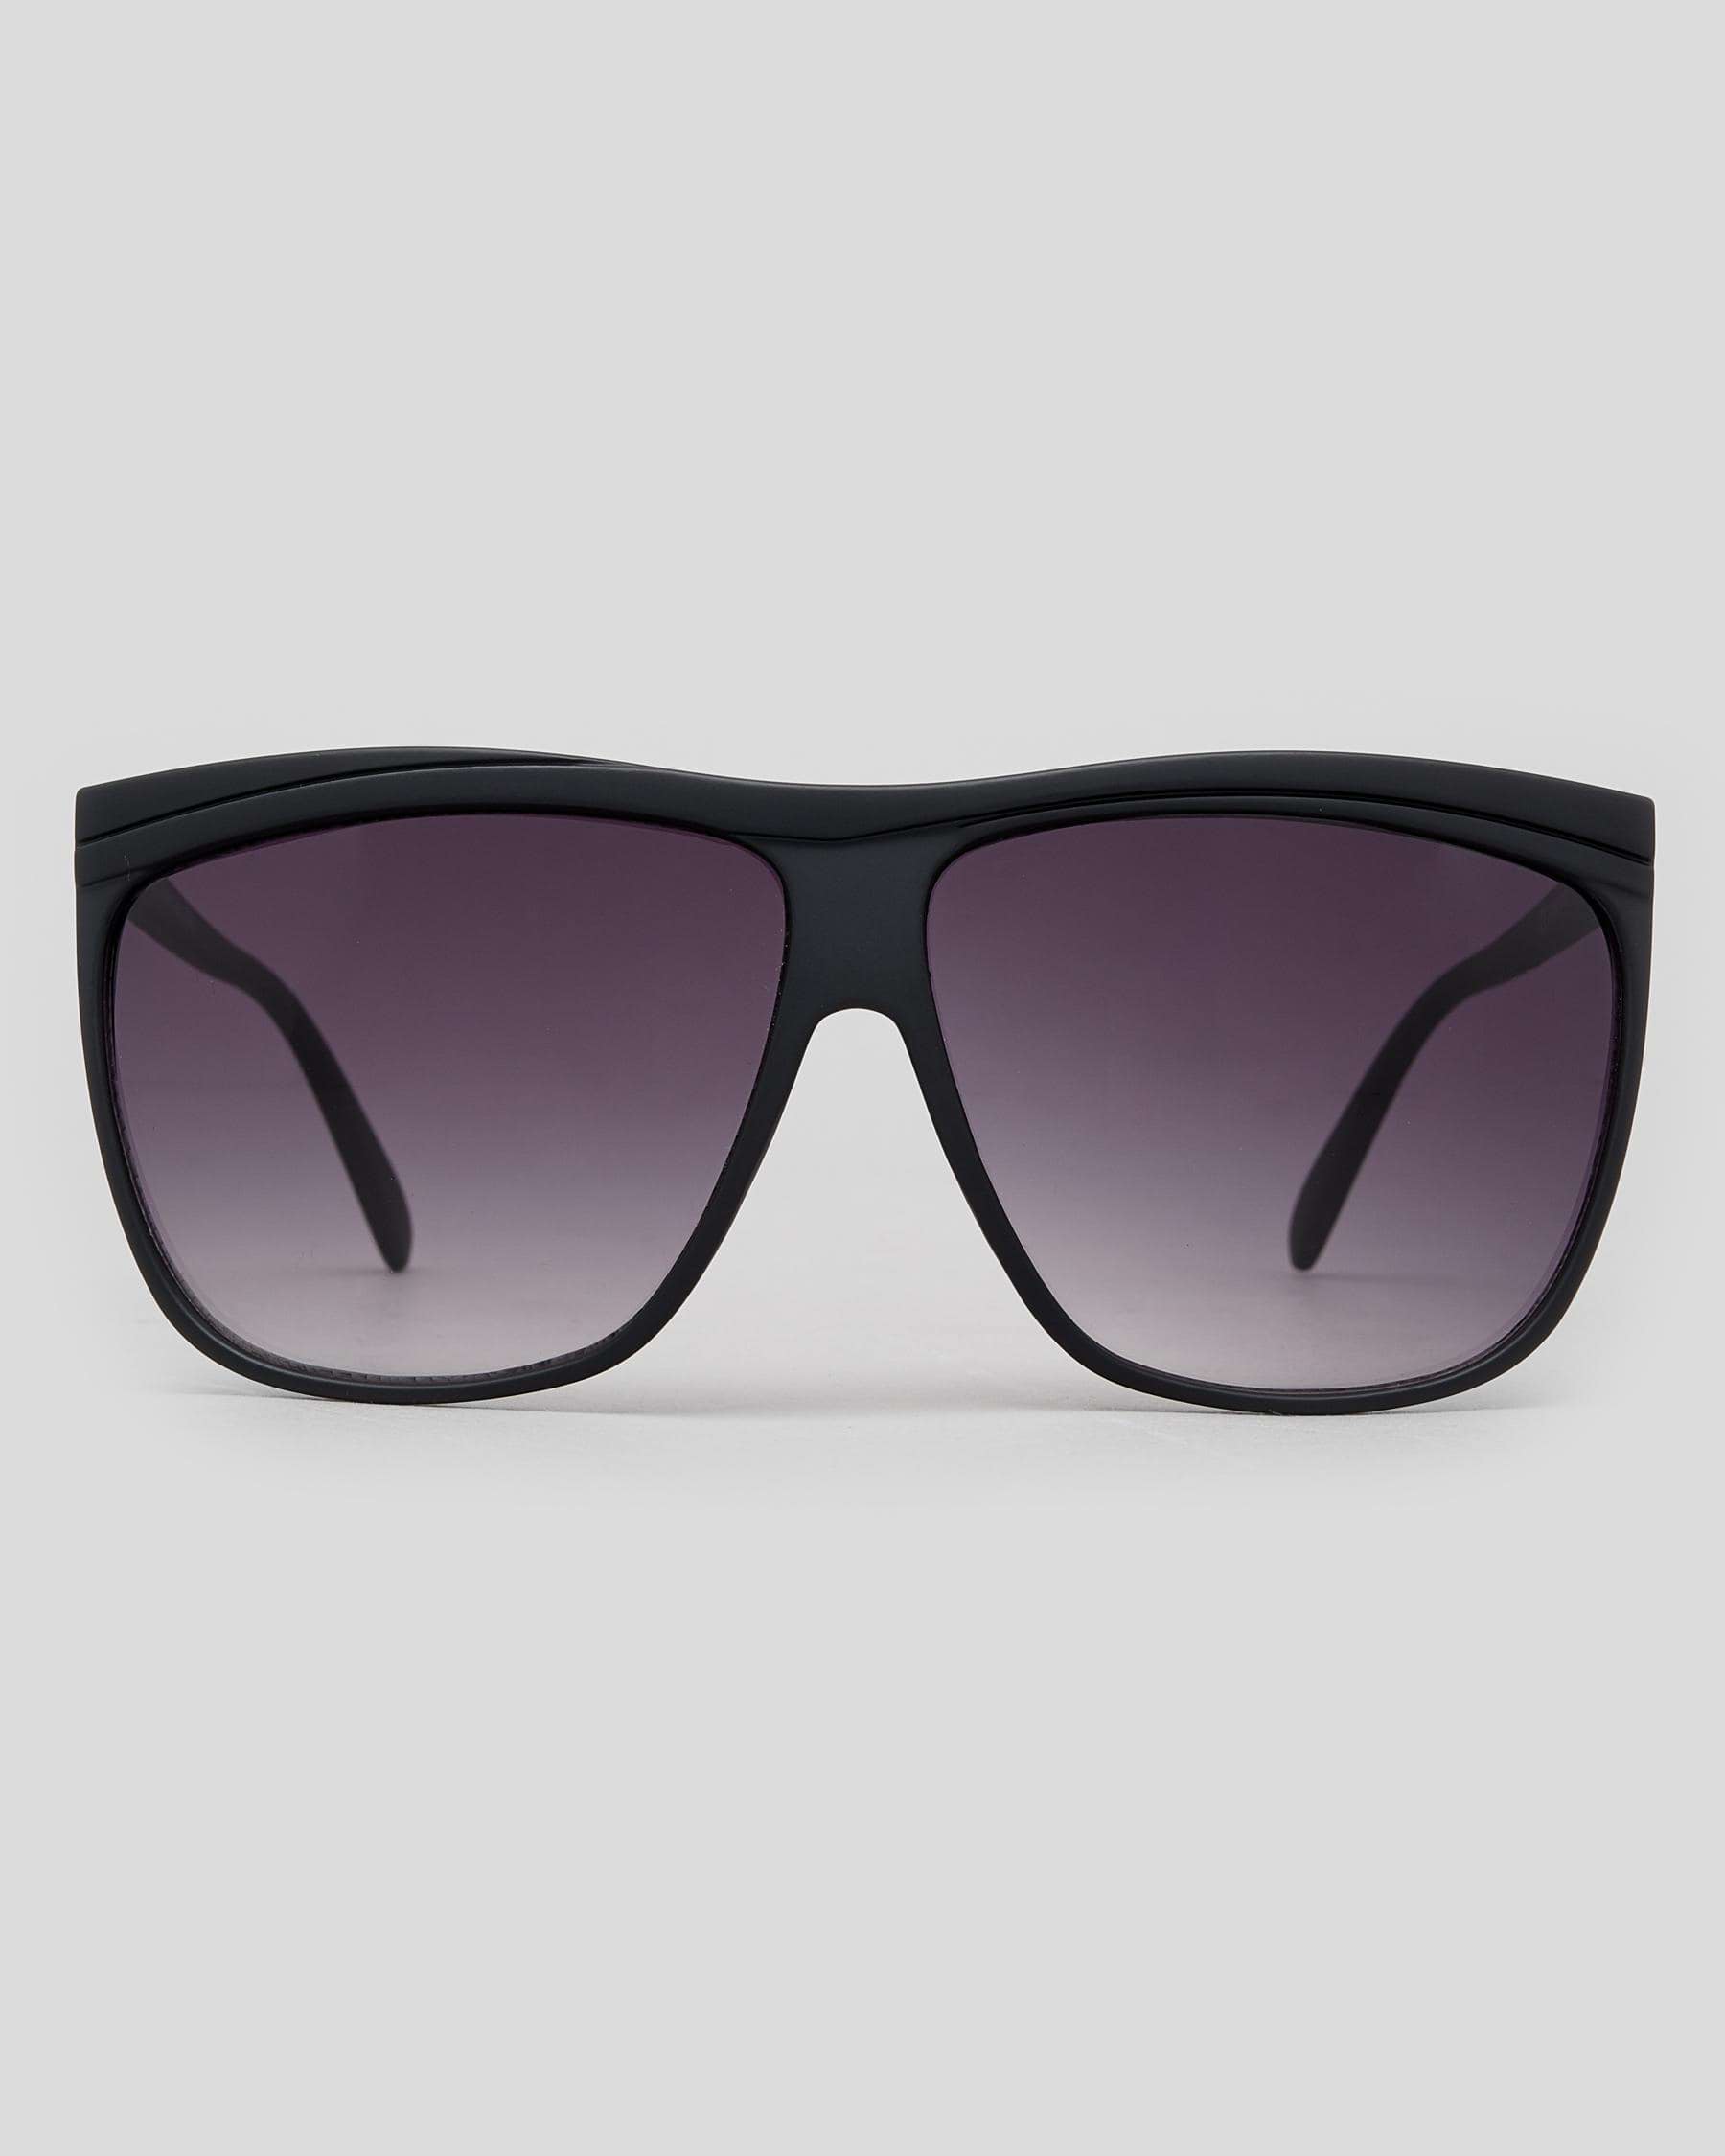 Shop Indie Eyewear Straight Edge Sunglasses In Matt Black Fast Shipping And Easy Returns City